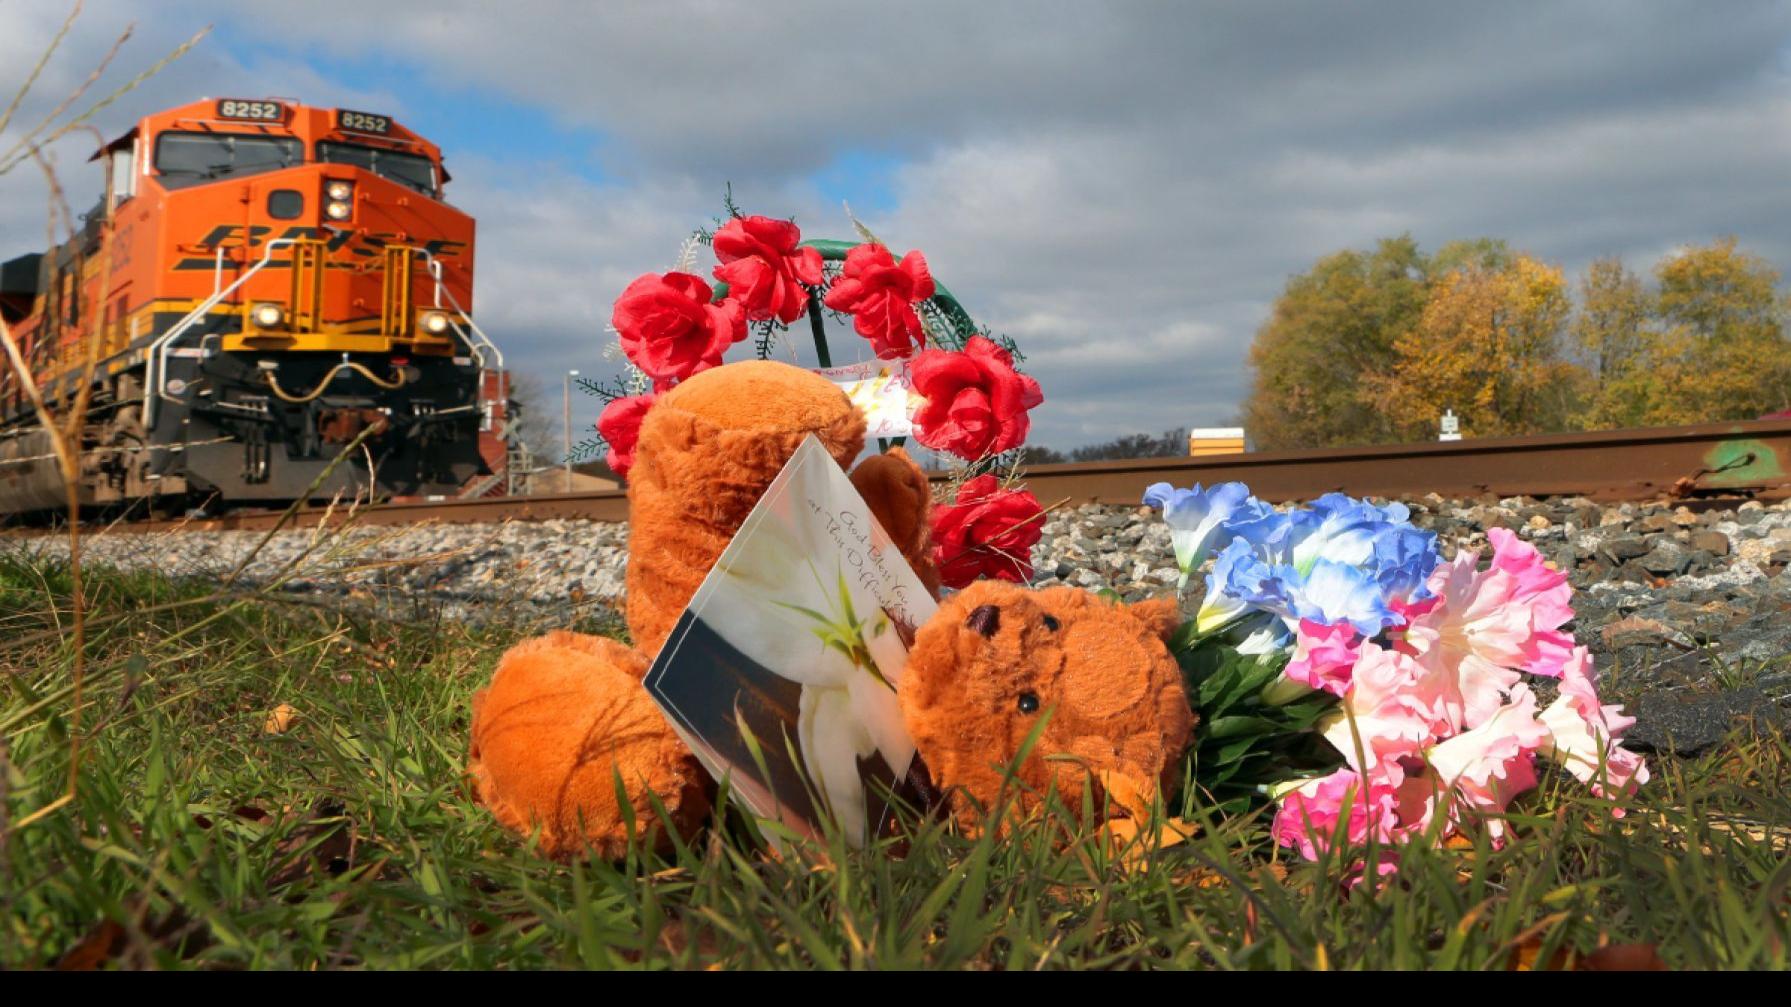 vandalia il halloween parade 2020 Mother 3 Children Killed In Vandalia Ill Train Crash Near Halloween Parade Illinois Stltoday Com vandalia il halloween parade 2020